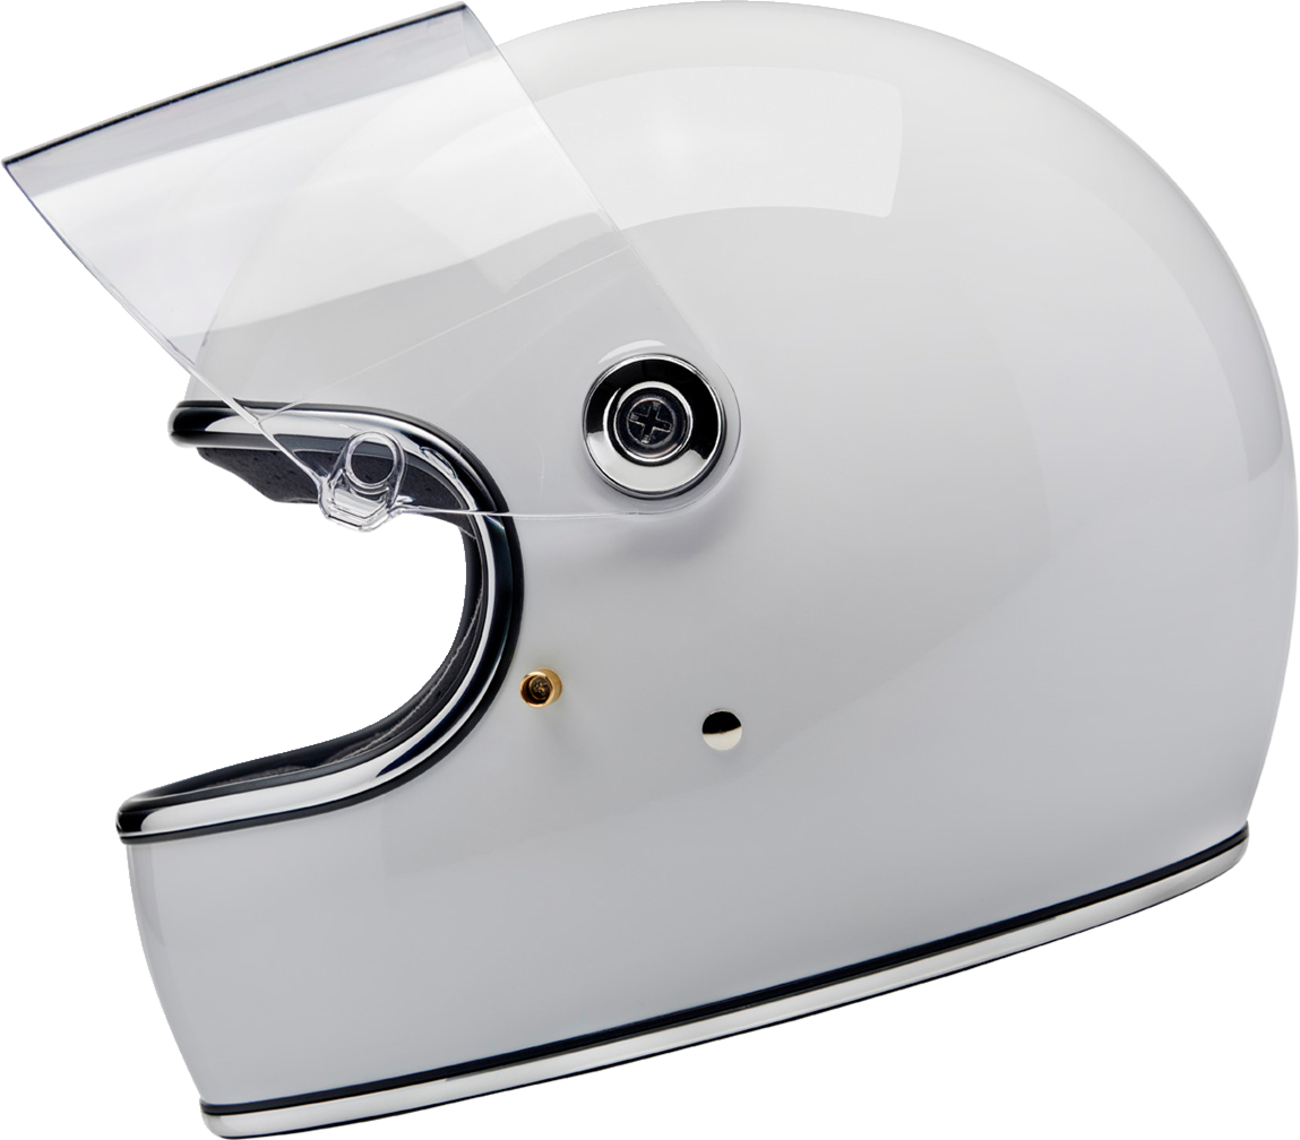 BILTWELL Gringo S Helmet - Gloss White - Small 1003-102-502